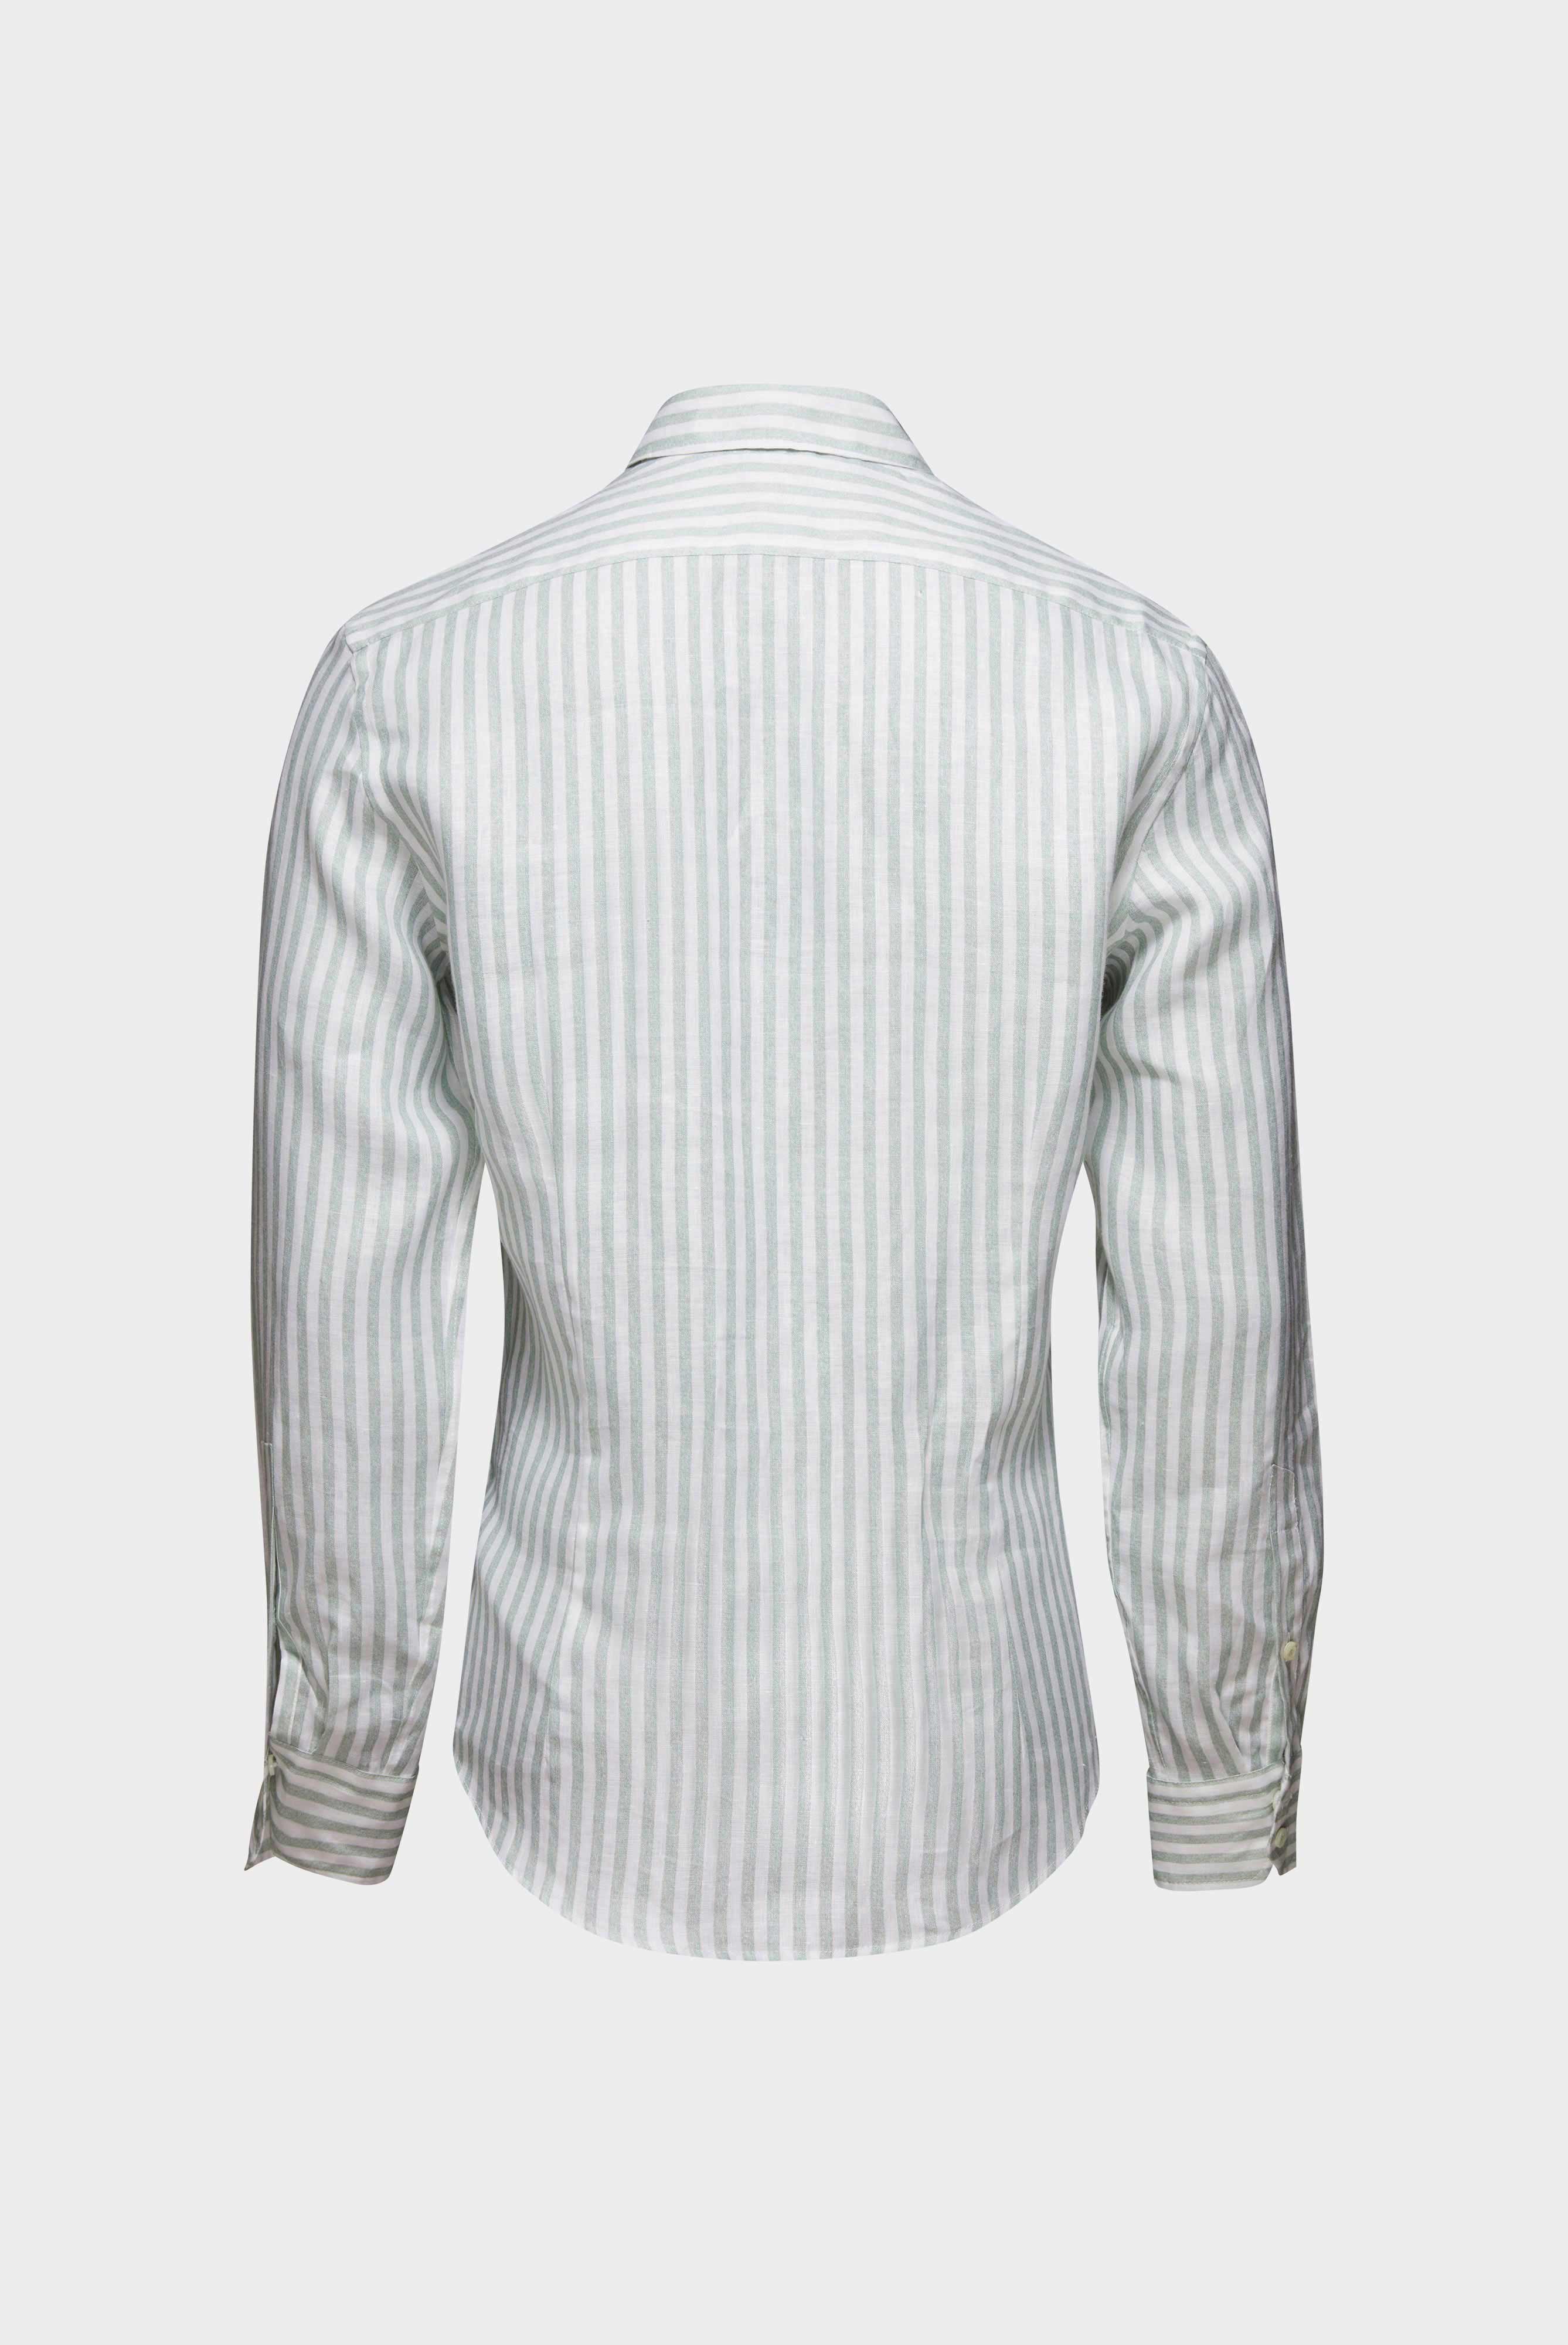 Casual Shirts+Linen Stripe Print Shirt Tailor Fit+20.2013.9V.170352.940.41